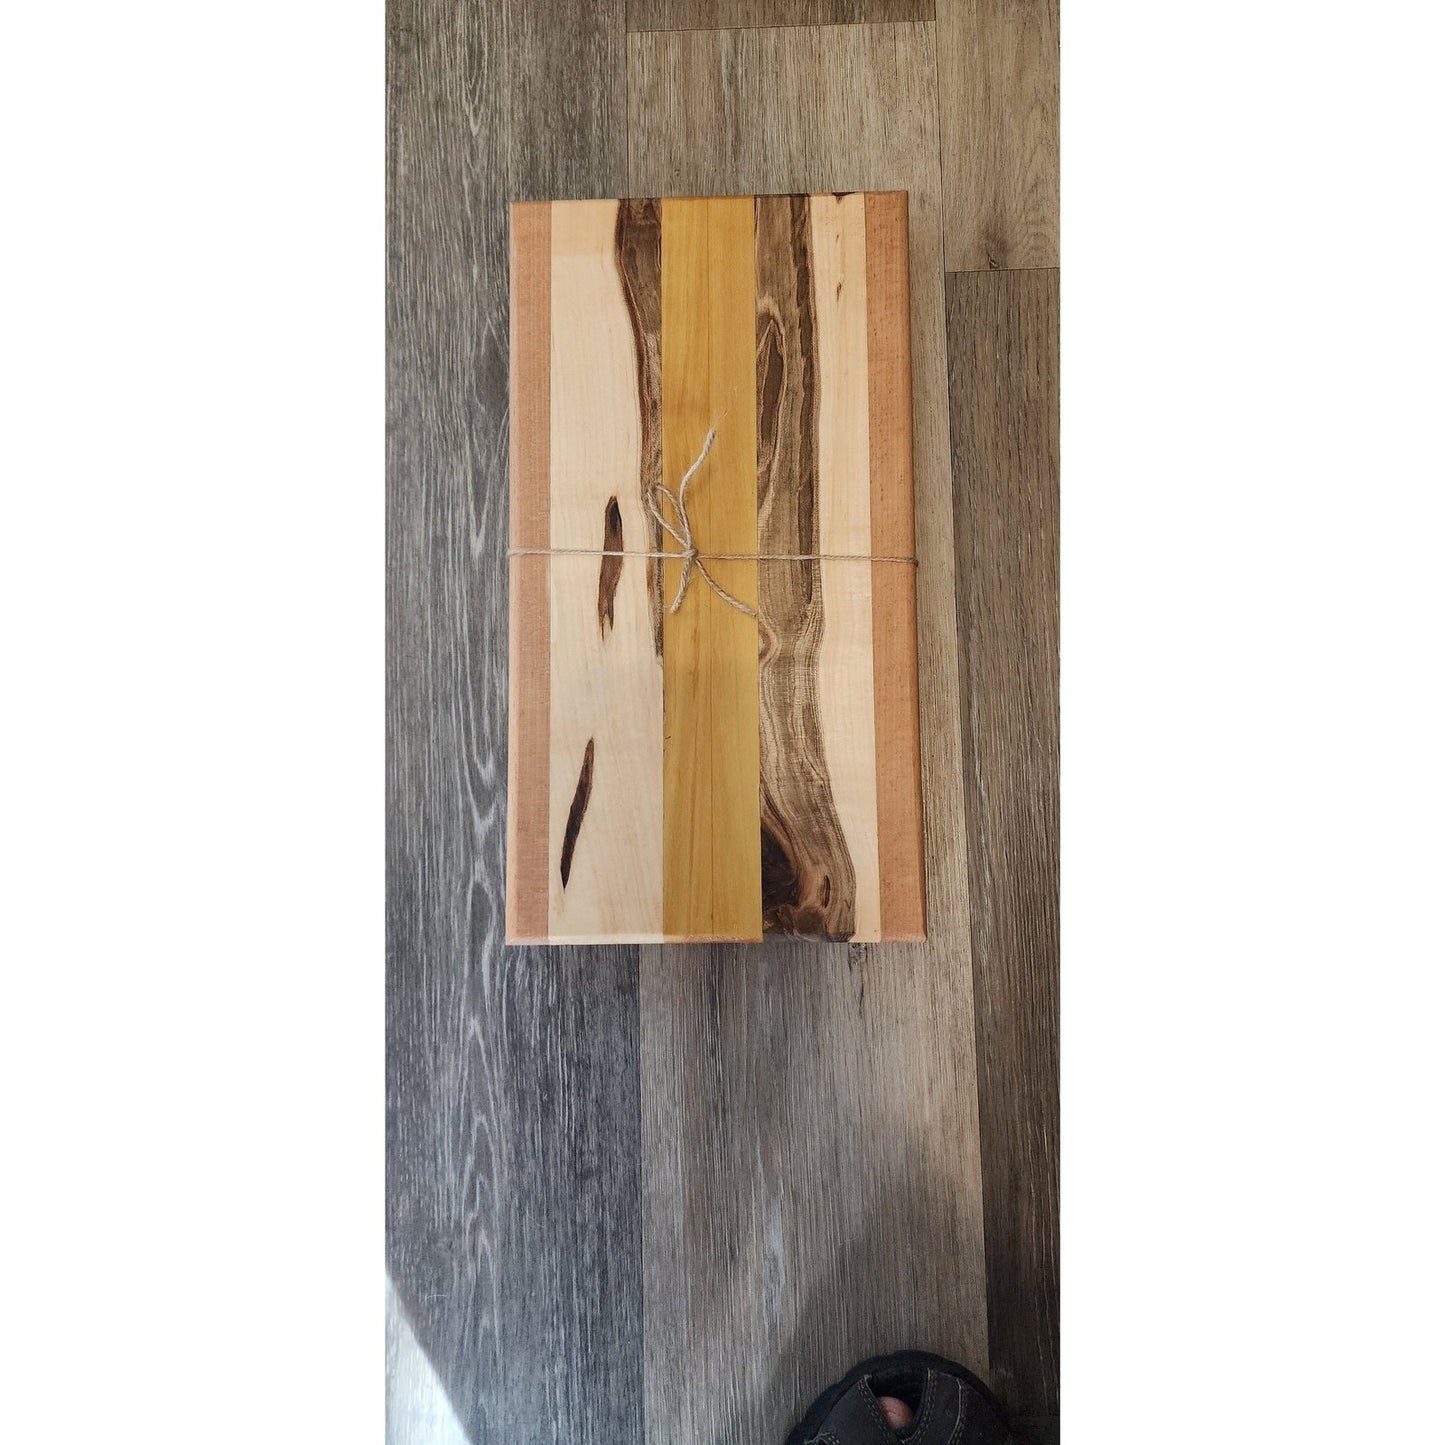 Yellowheart and Ambrosia Maple Cutting Board